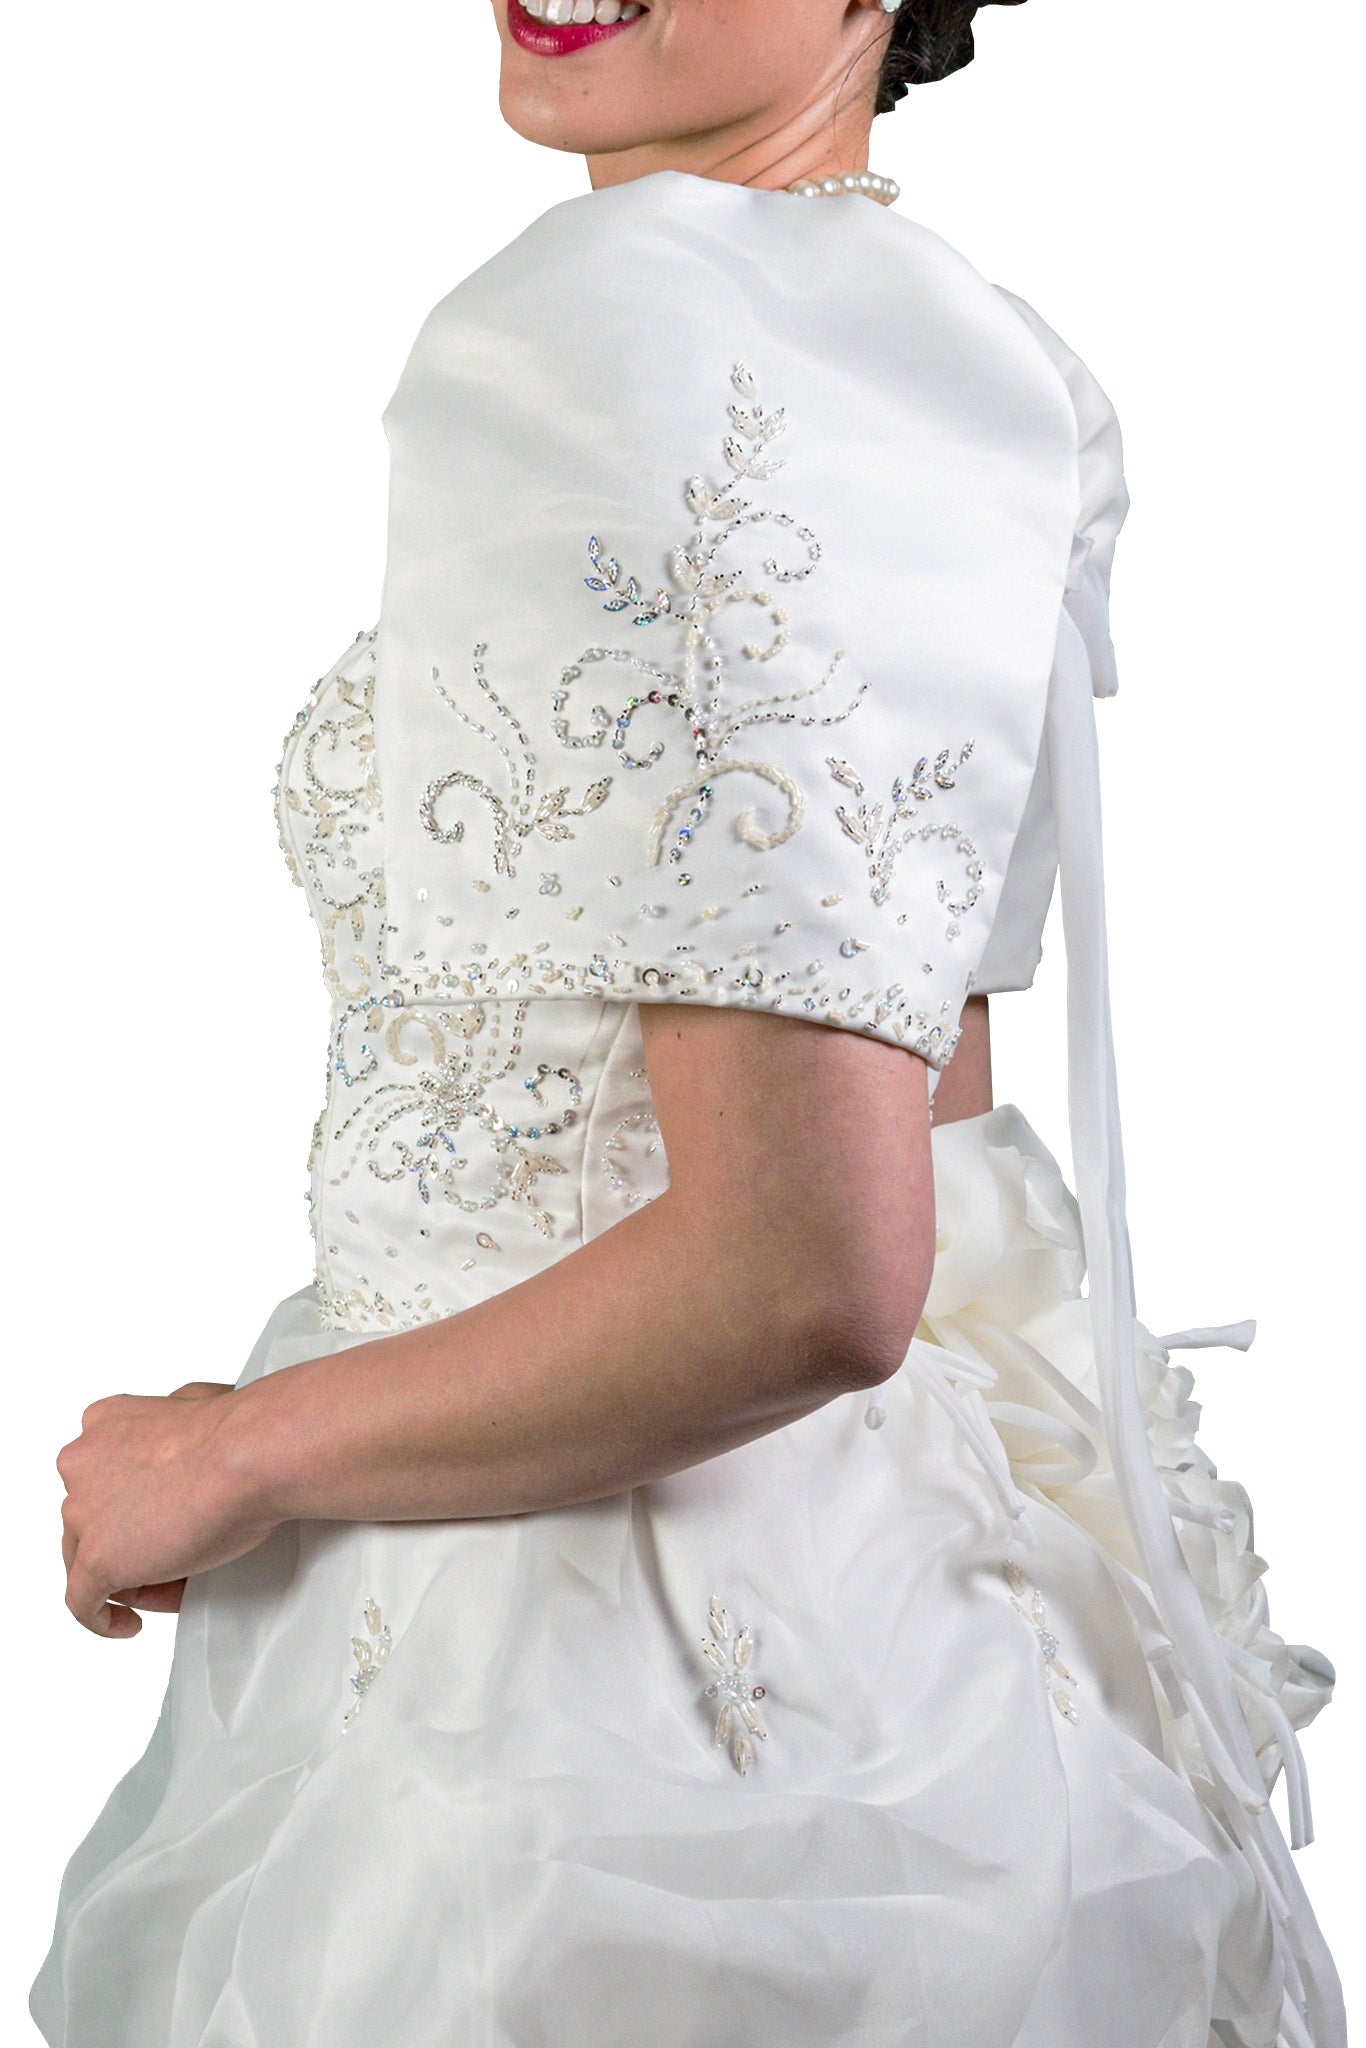 BARONG WAREHOUSE - ID01 - CUSTOM ORDER - Bridal Filipiniana Cloud Gown